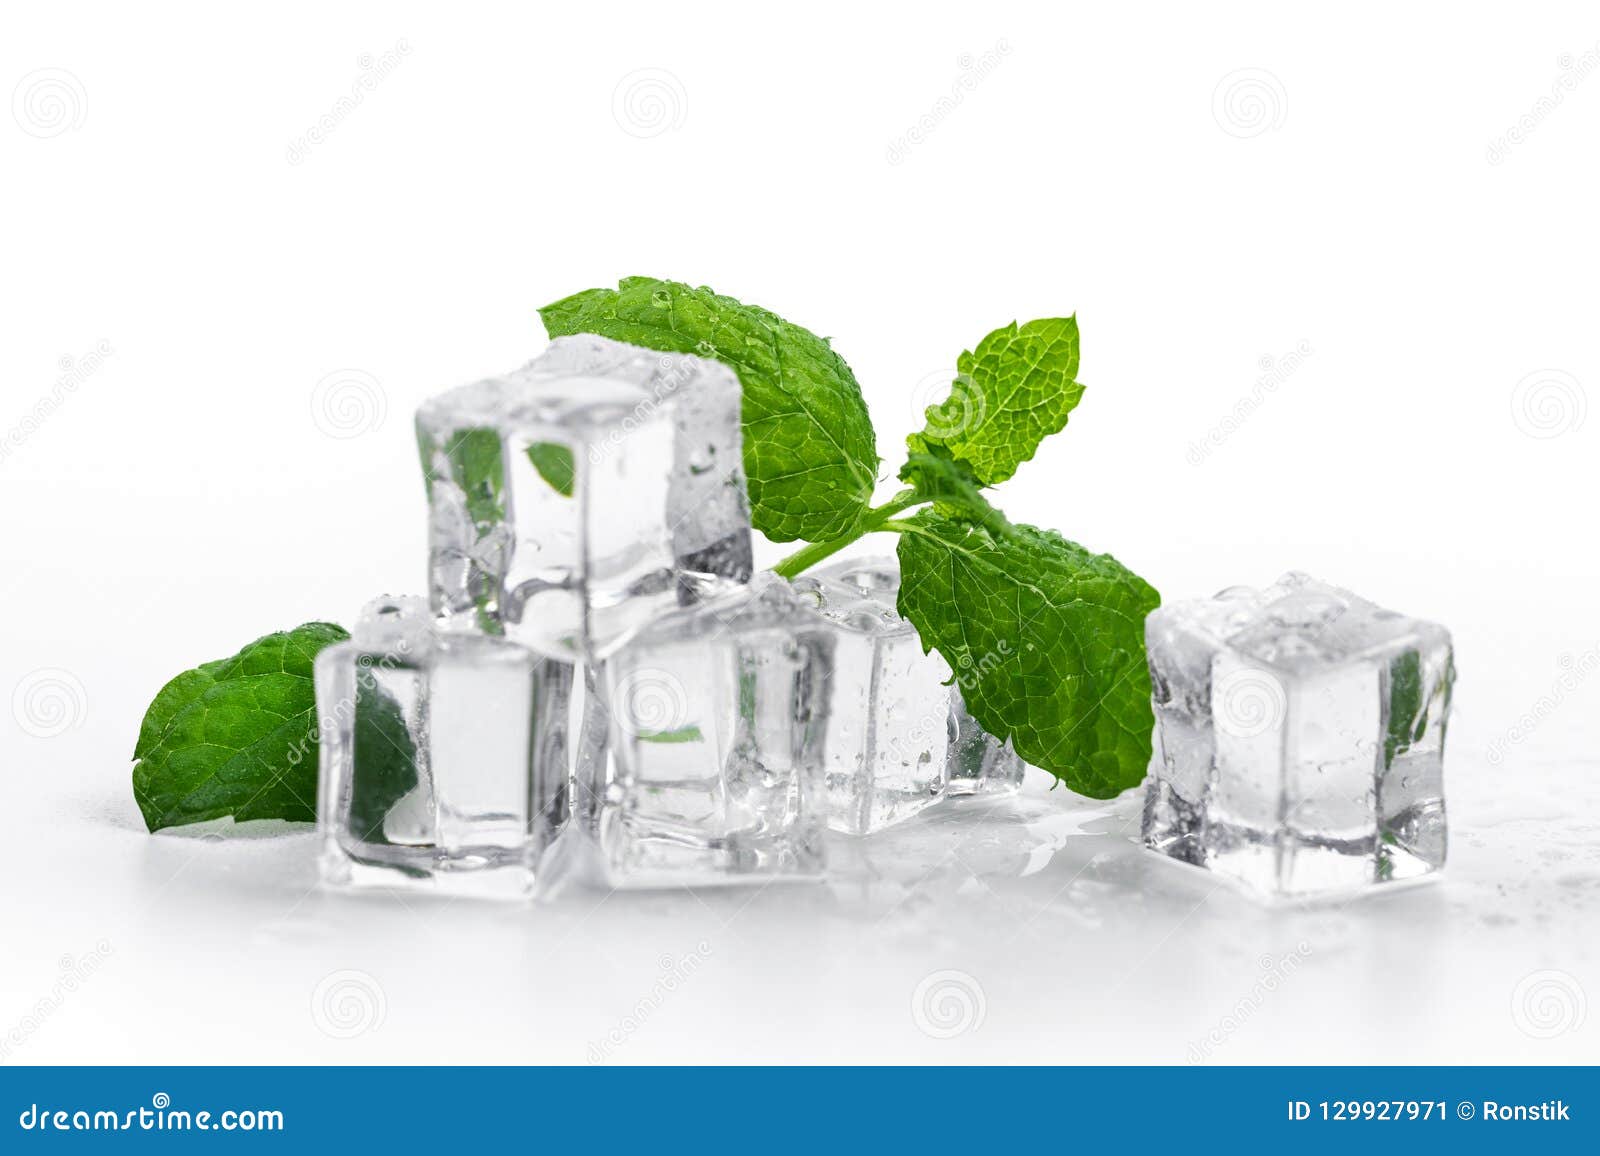 fresh-mint-ice-cubes-white-background-129927971.jpg